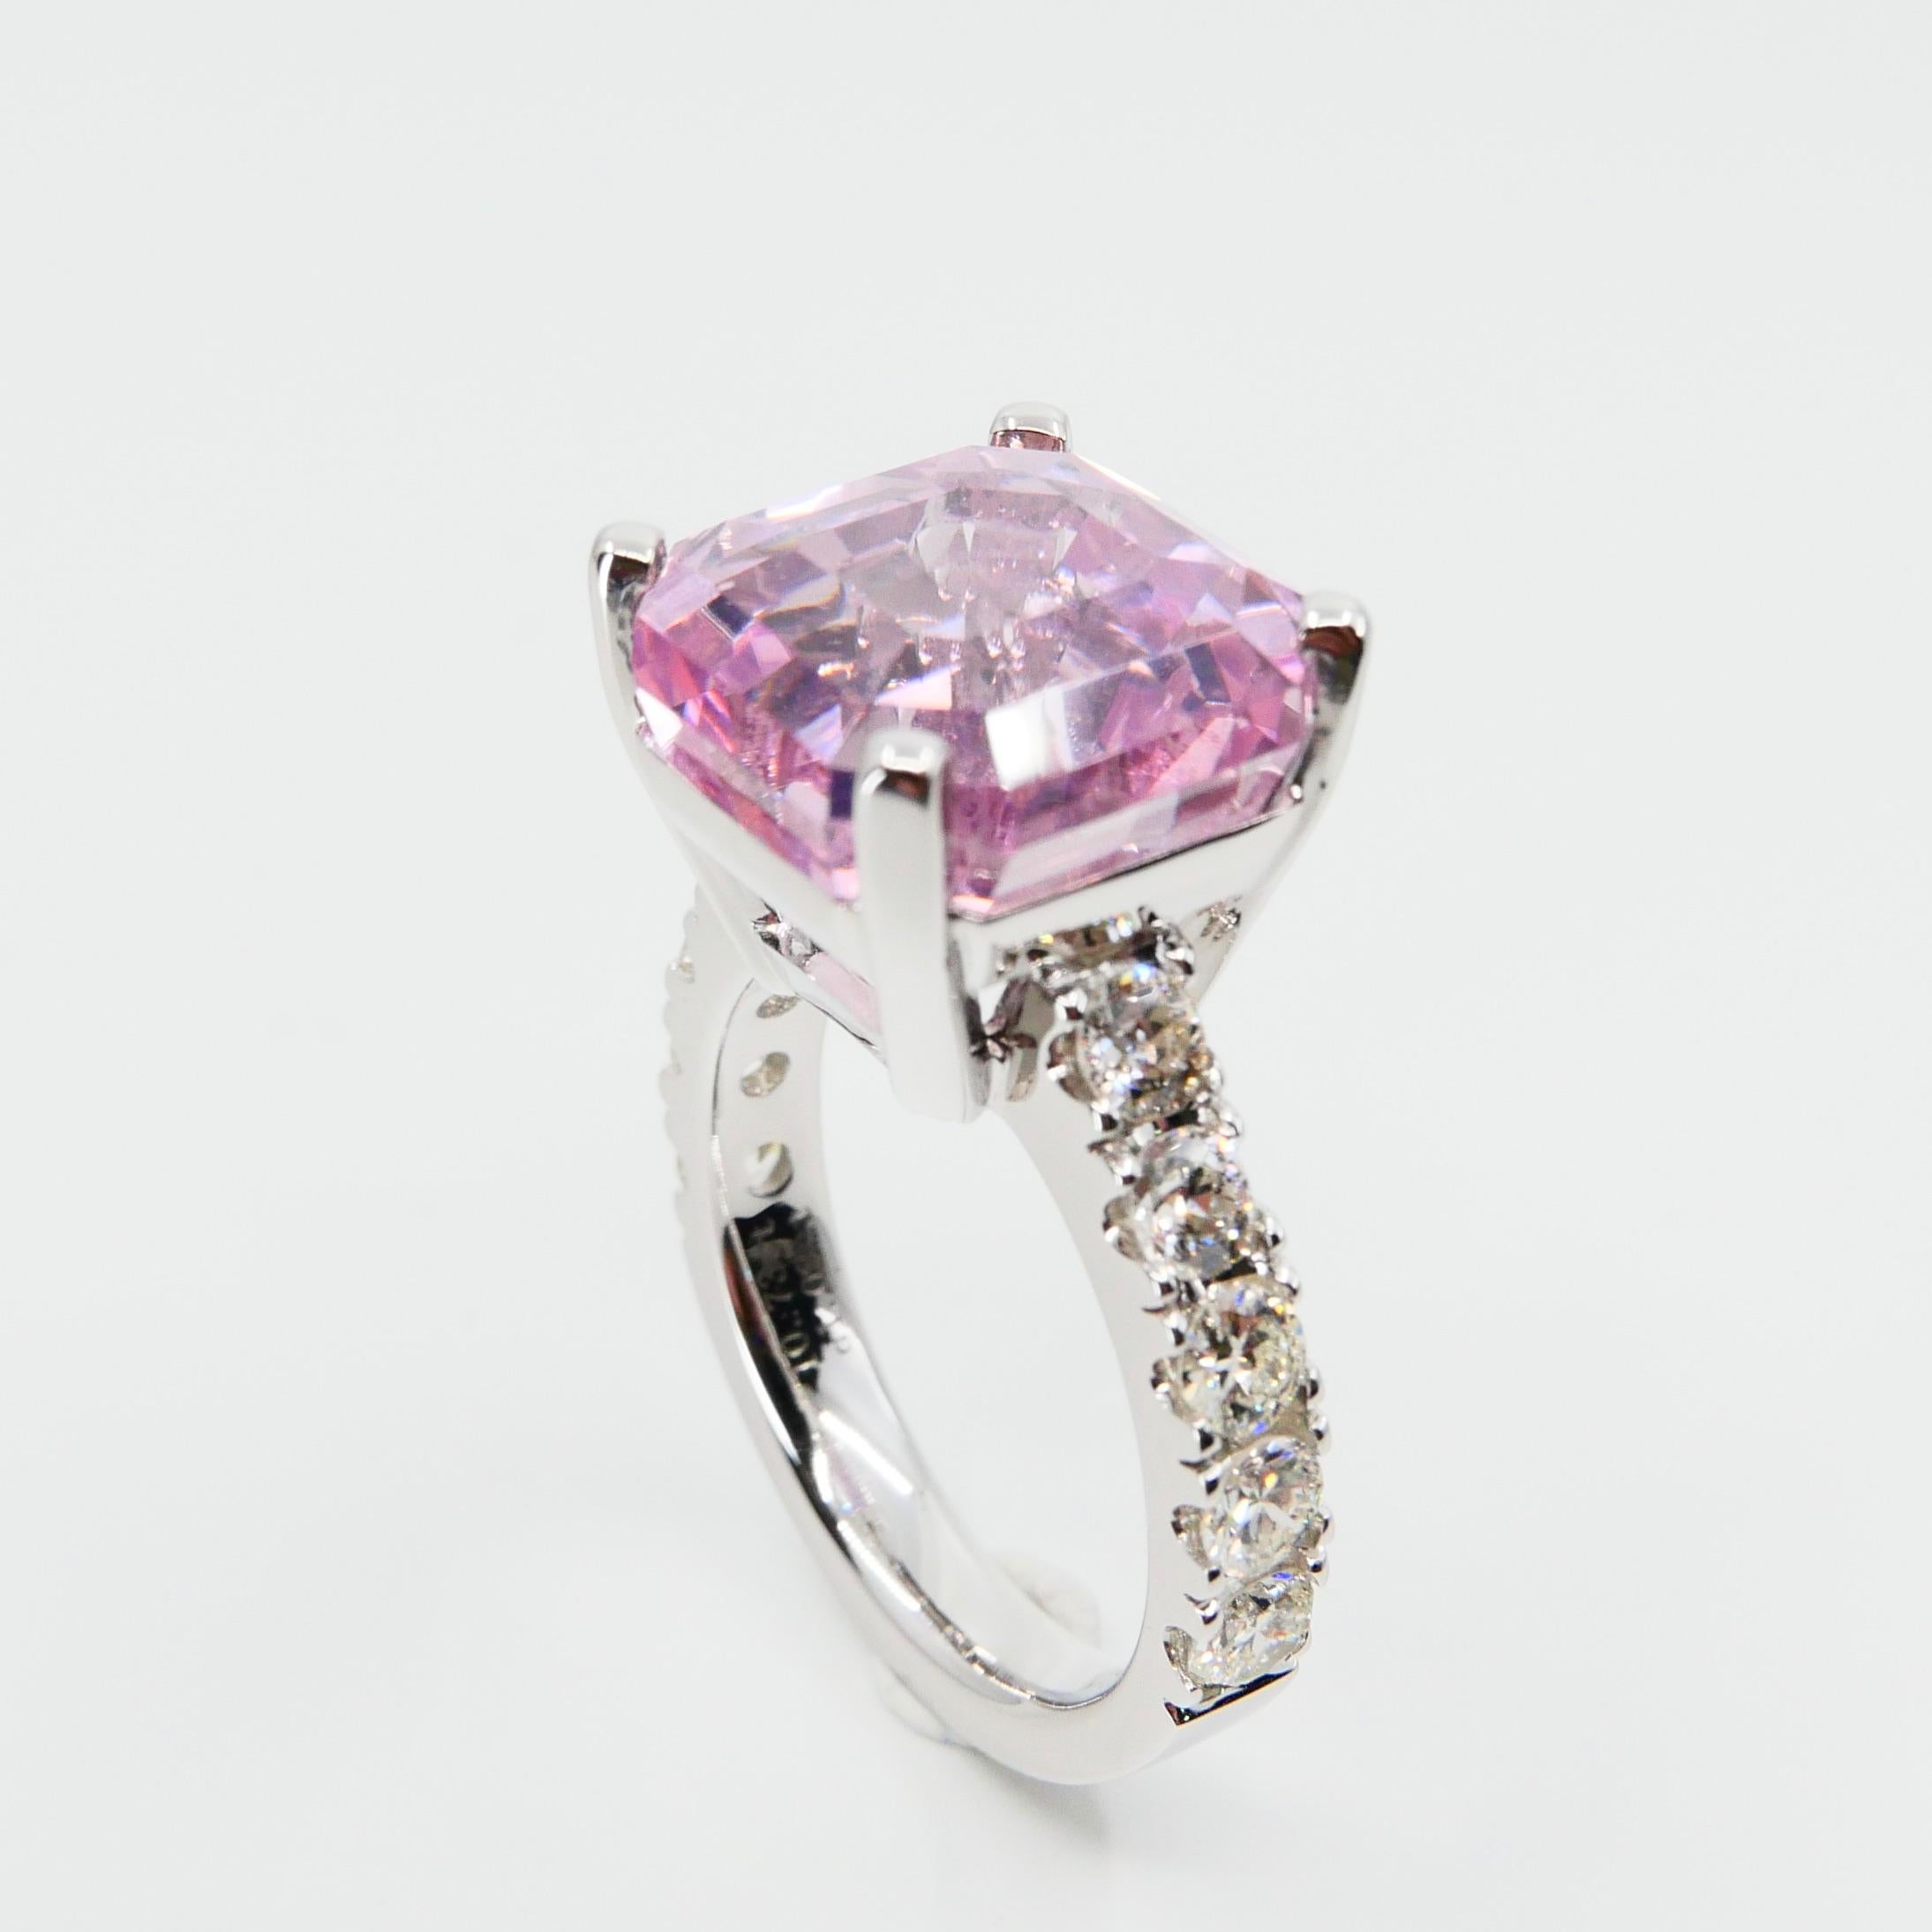 Asscher Cut Pink Kunzite 10.73 Carat and Diamond Cocktail Ring, Statement Ring 11